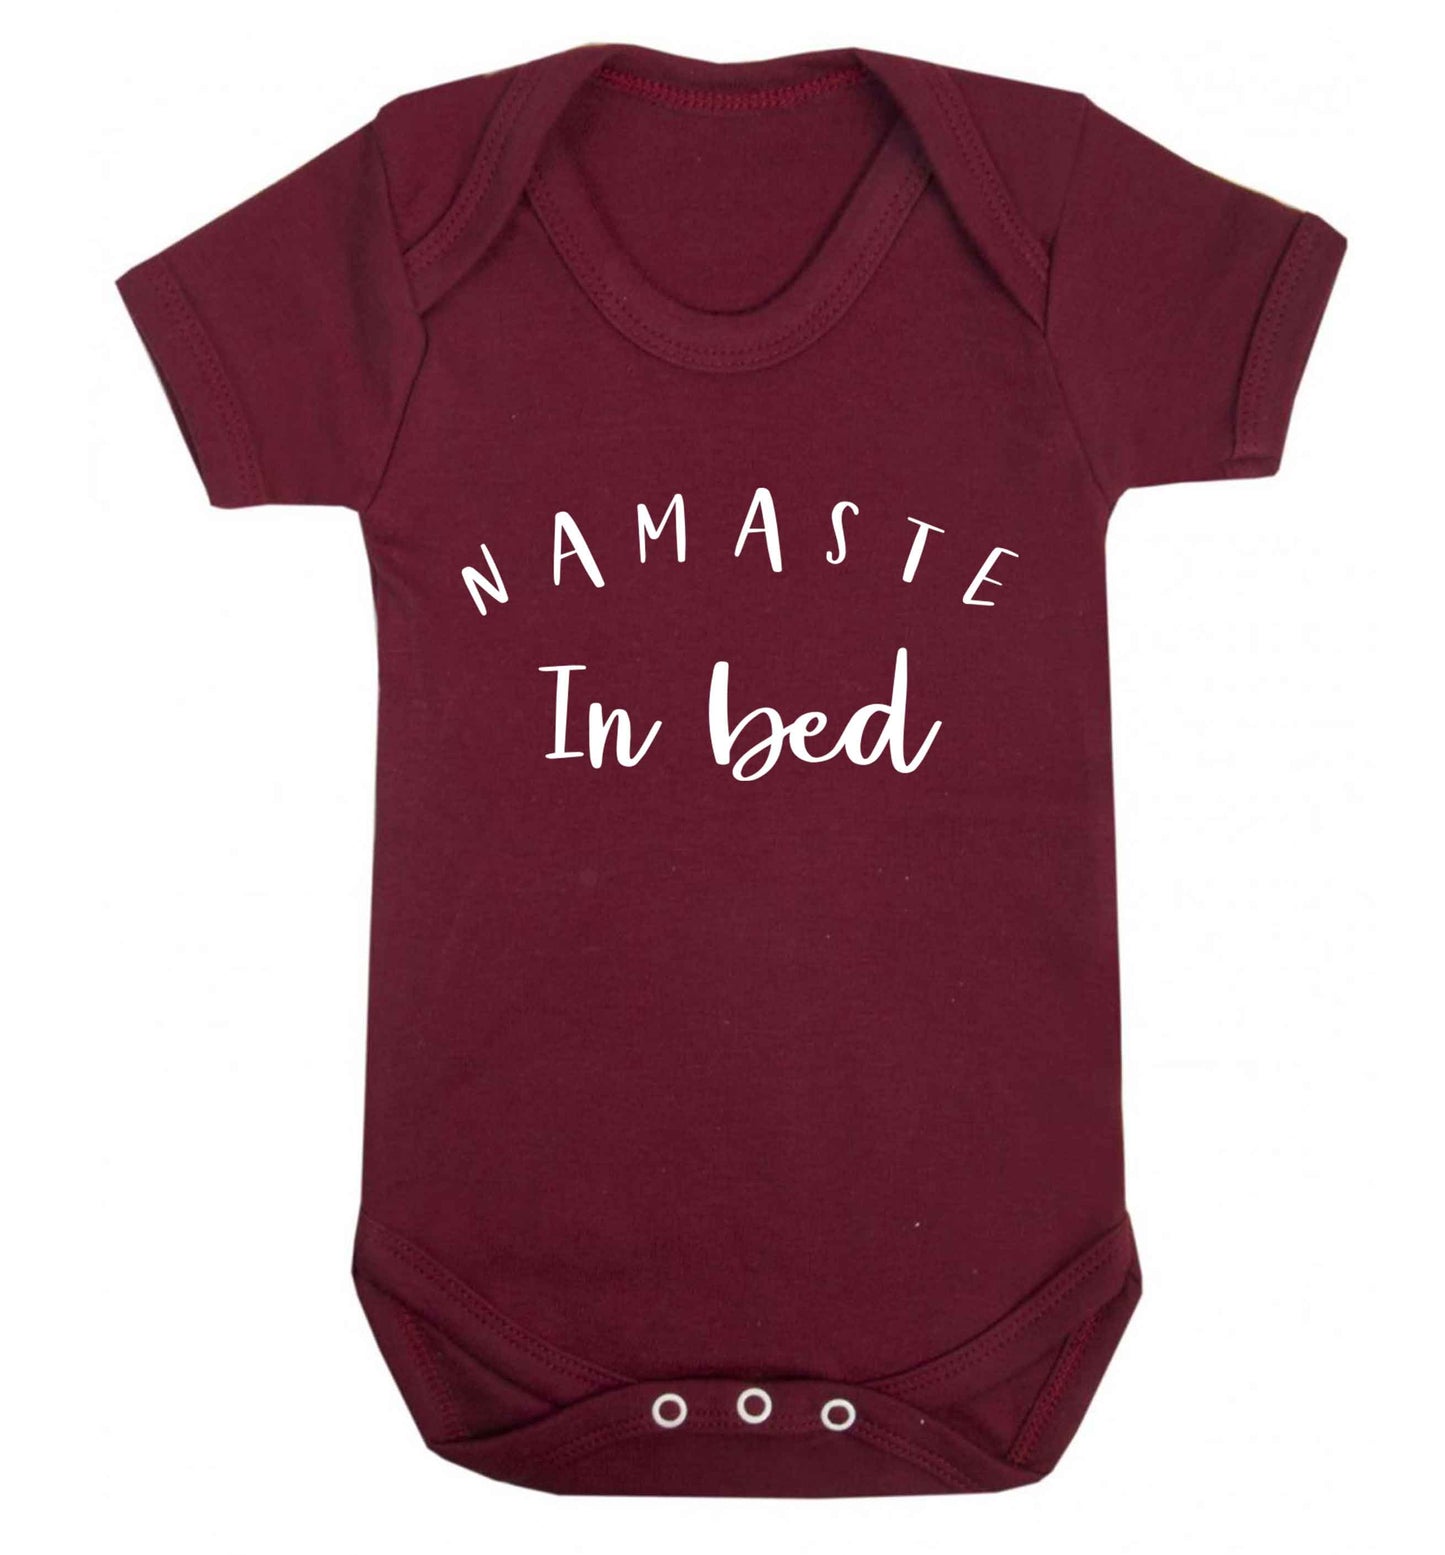 Namaste in bed Baby Vest maroon 18-24 months